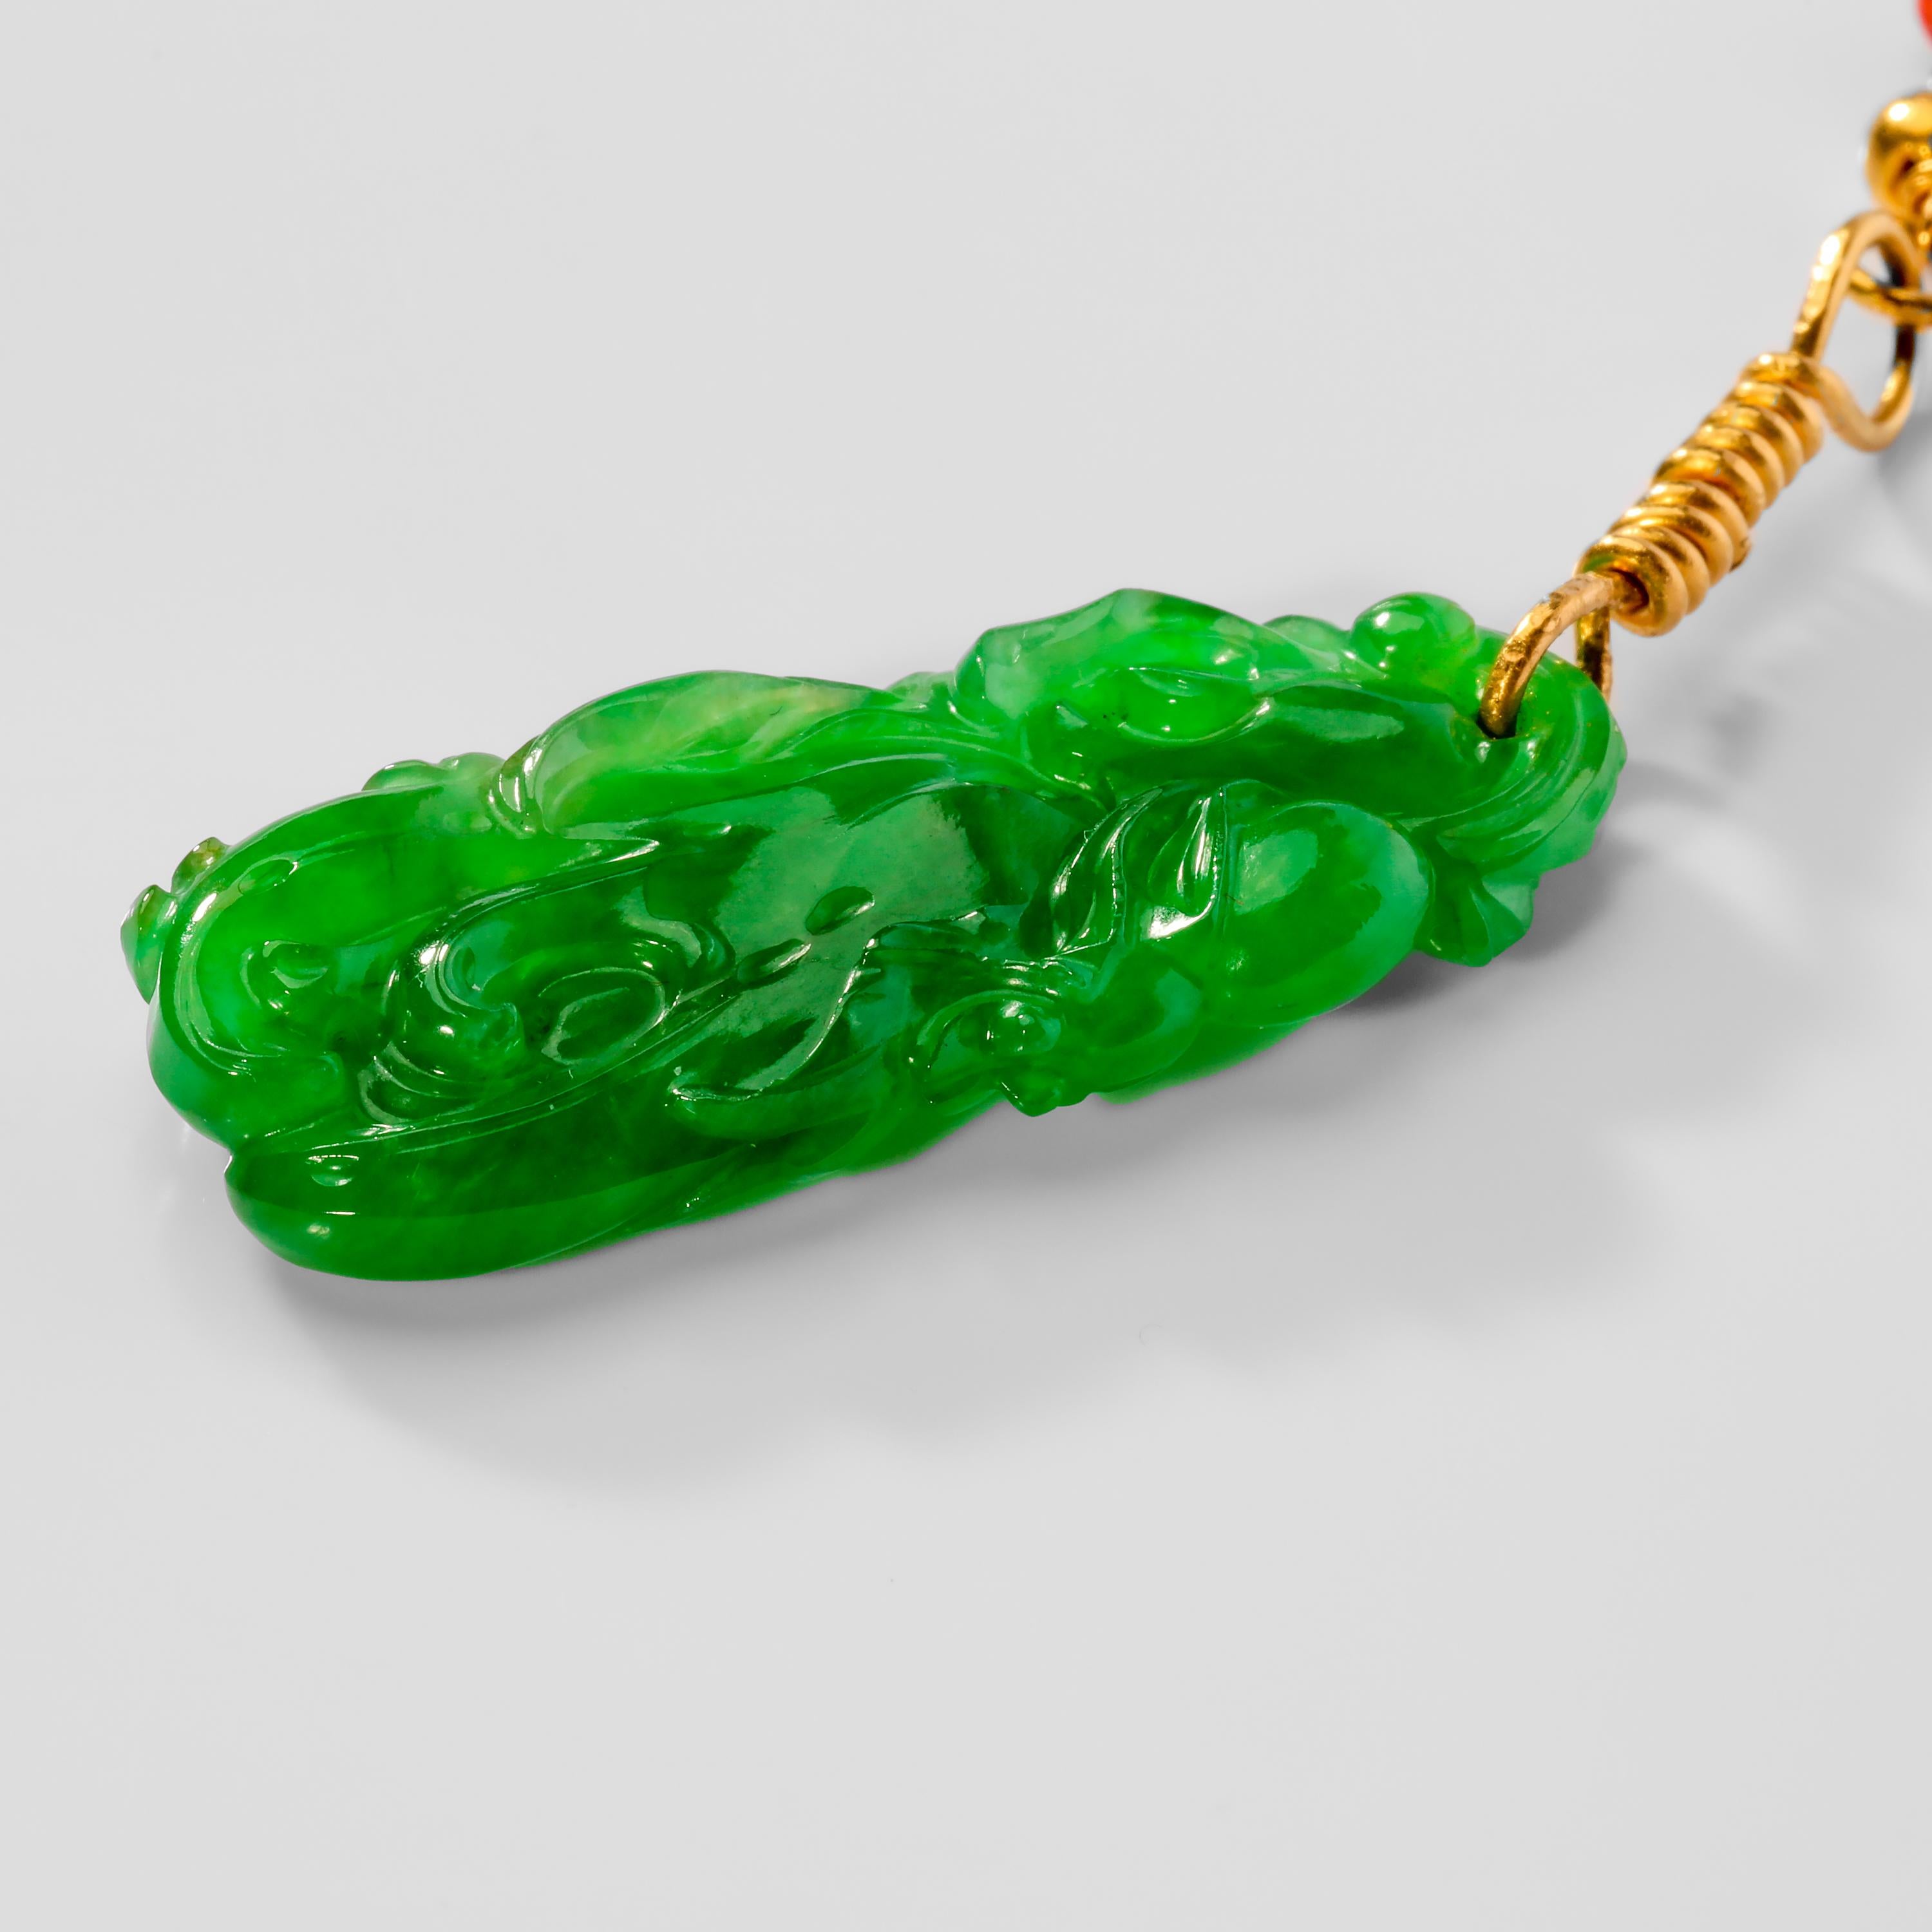 barbara hutton jadeite necklace